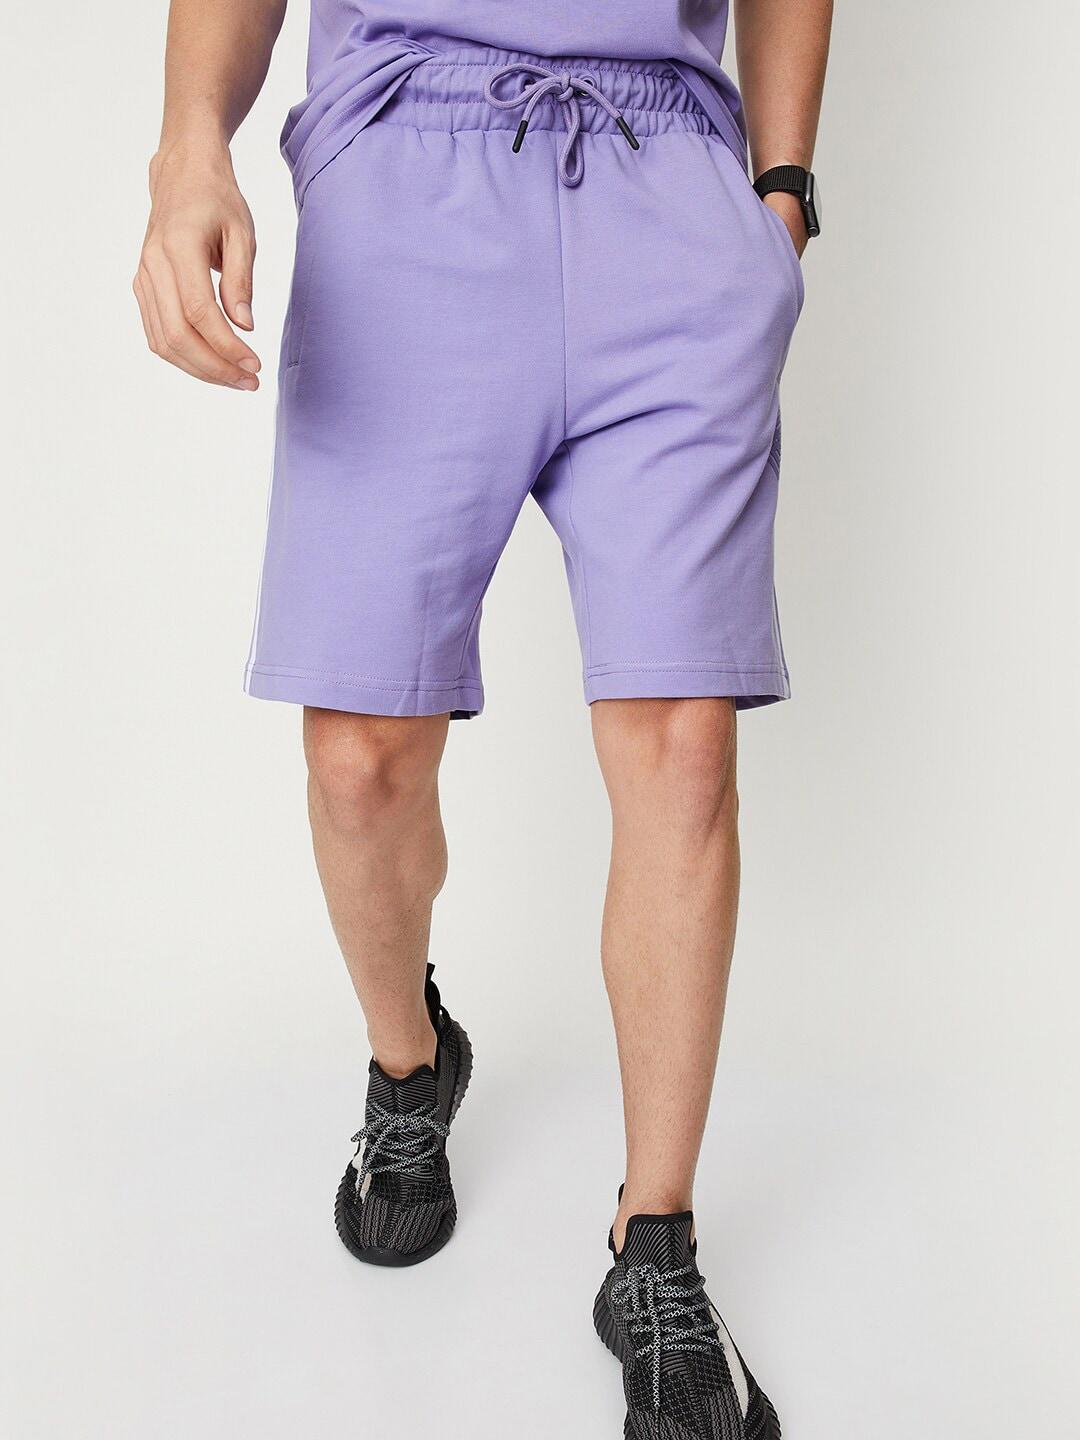 max-men-mid-rise-sports-shorts